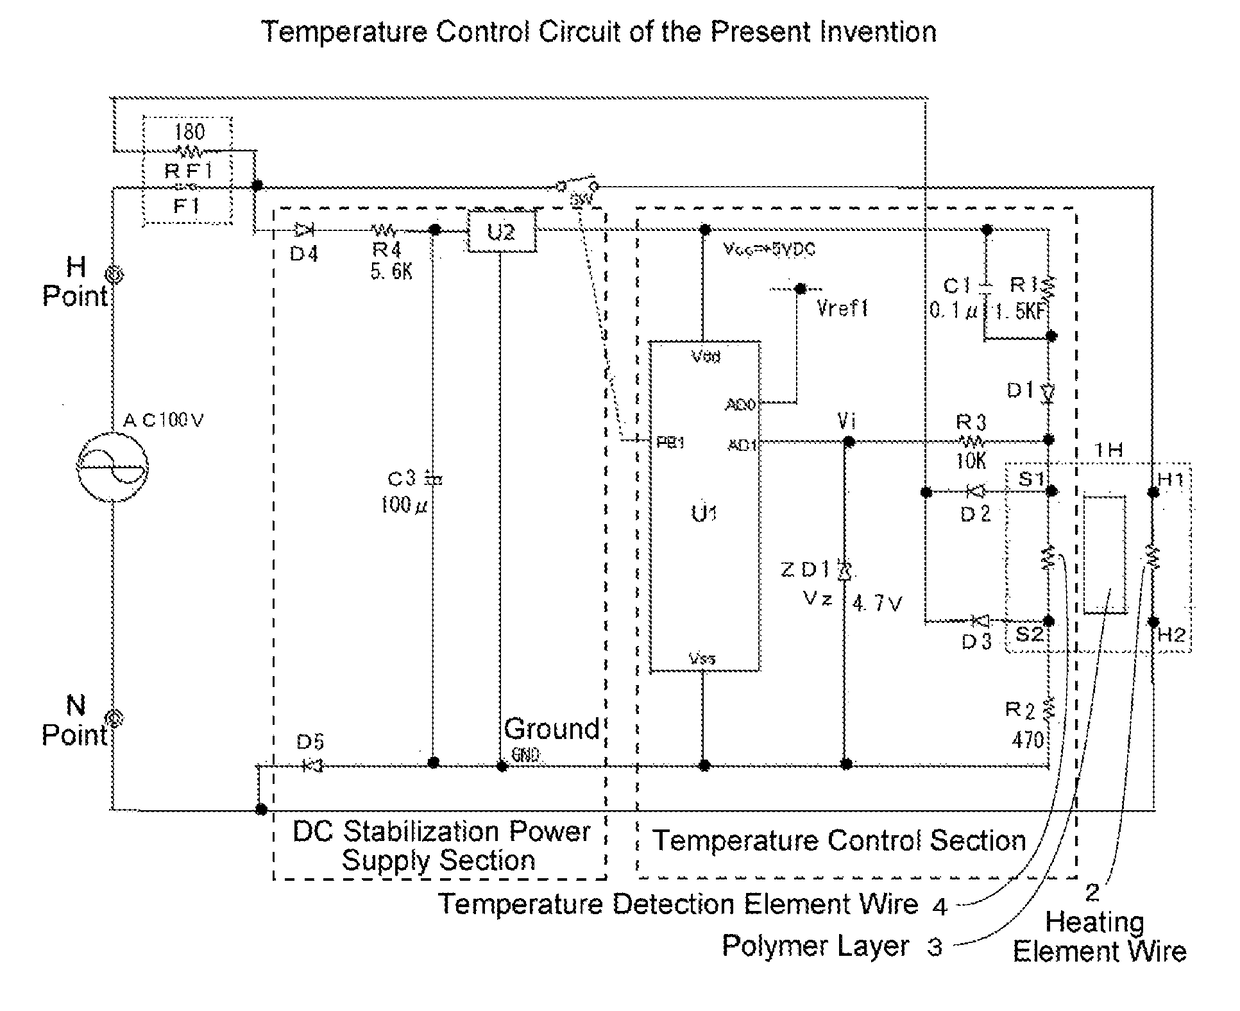 Warming temperature control device